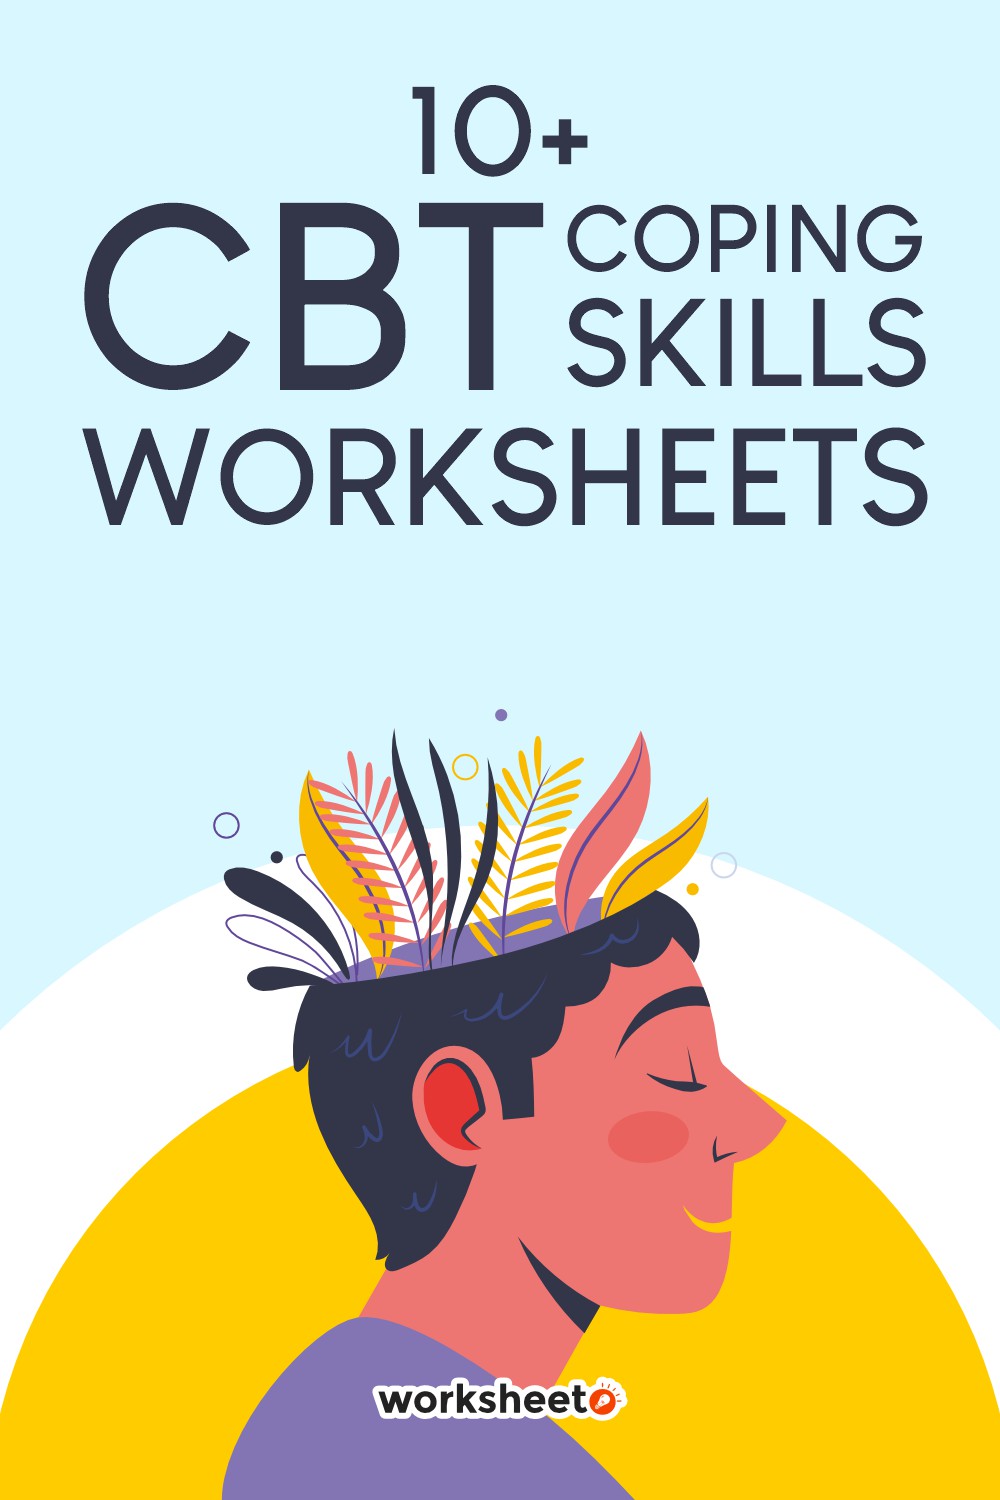 CBT Coping Skills Worksheets